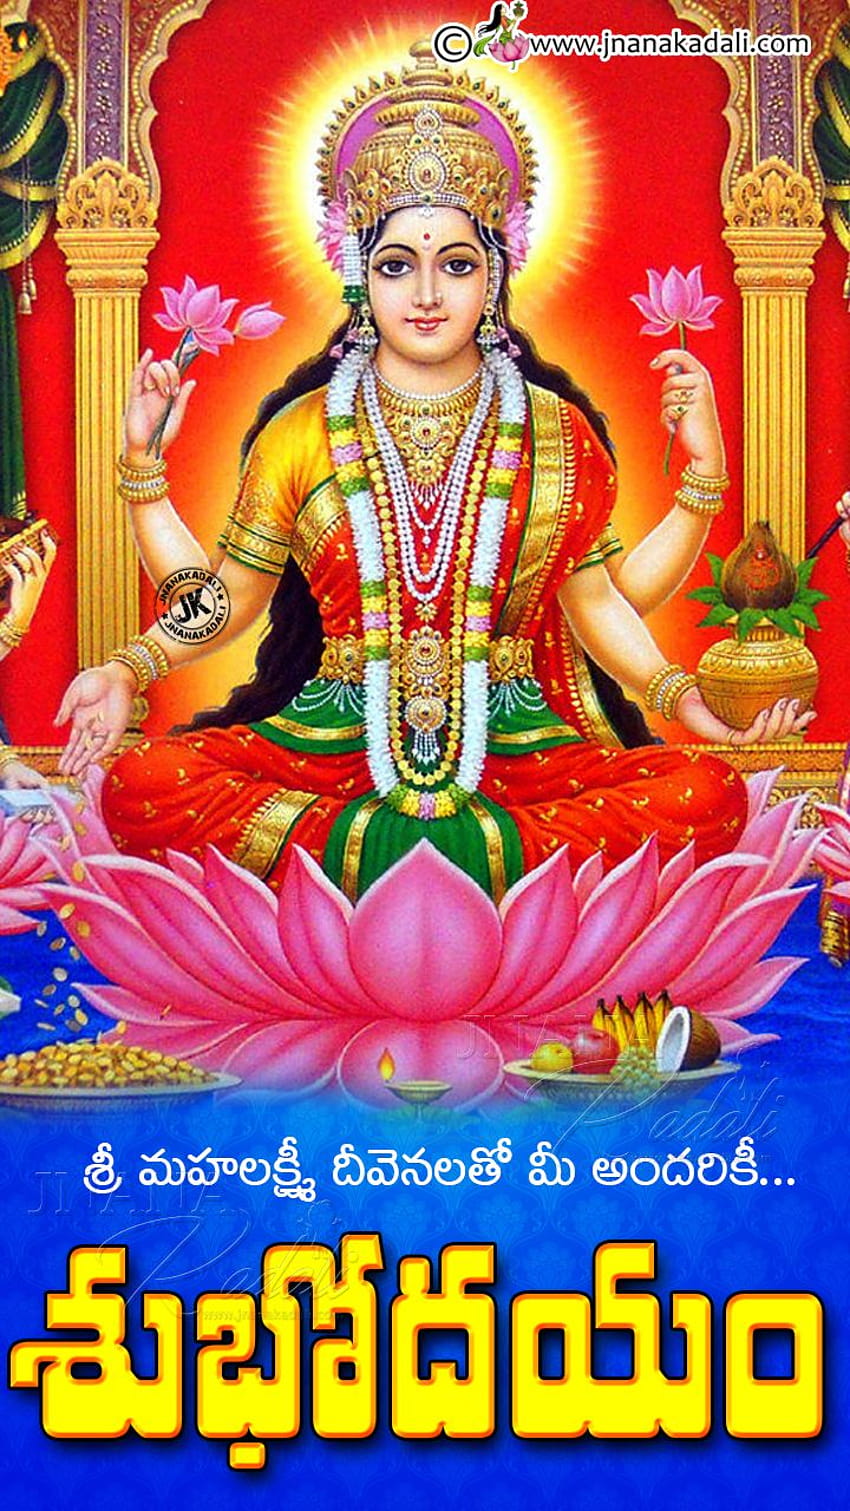 Good Morning Telugu Greetings with Goddess Lakshmi, varalakshmi ...